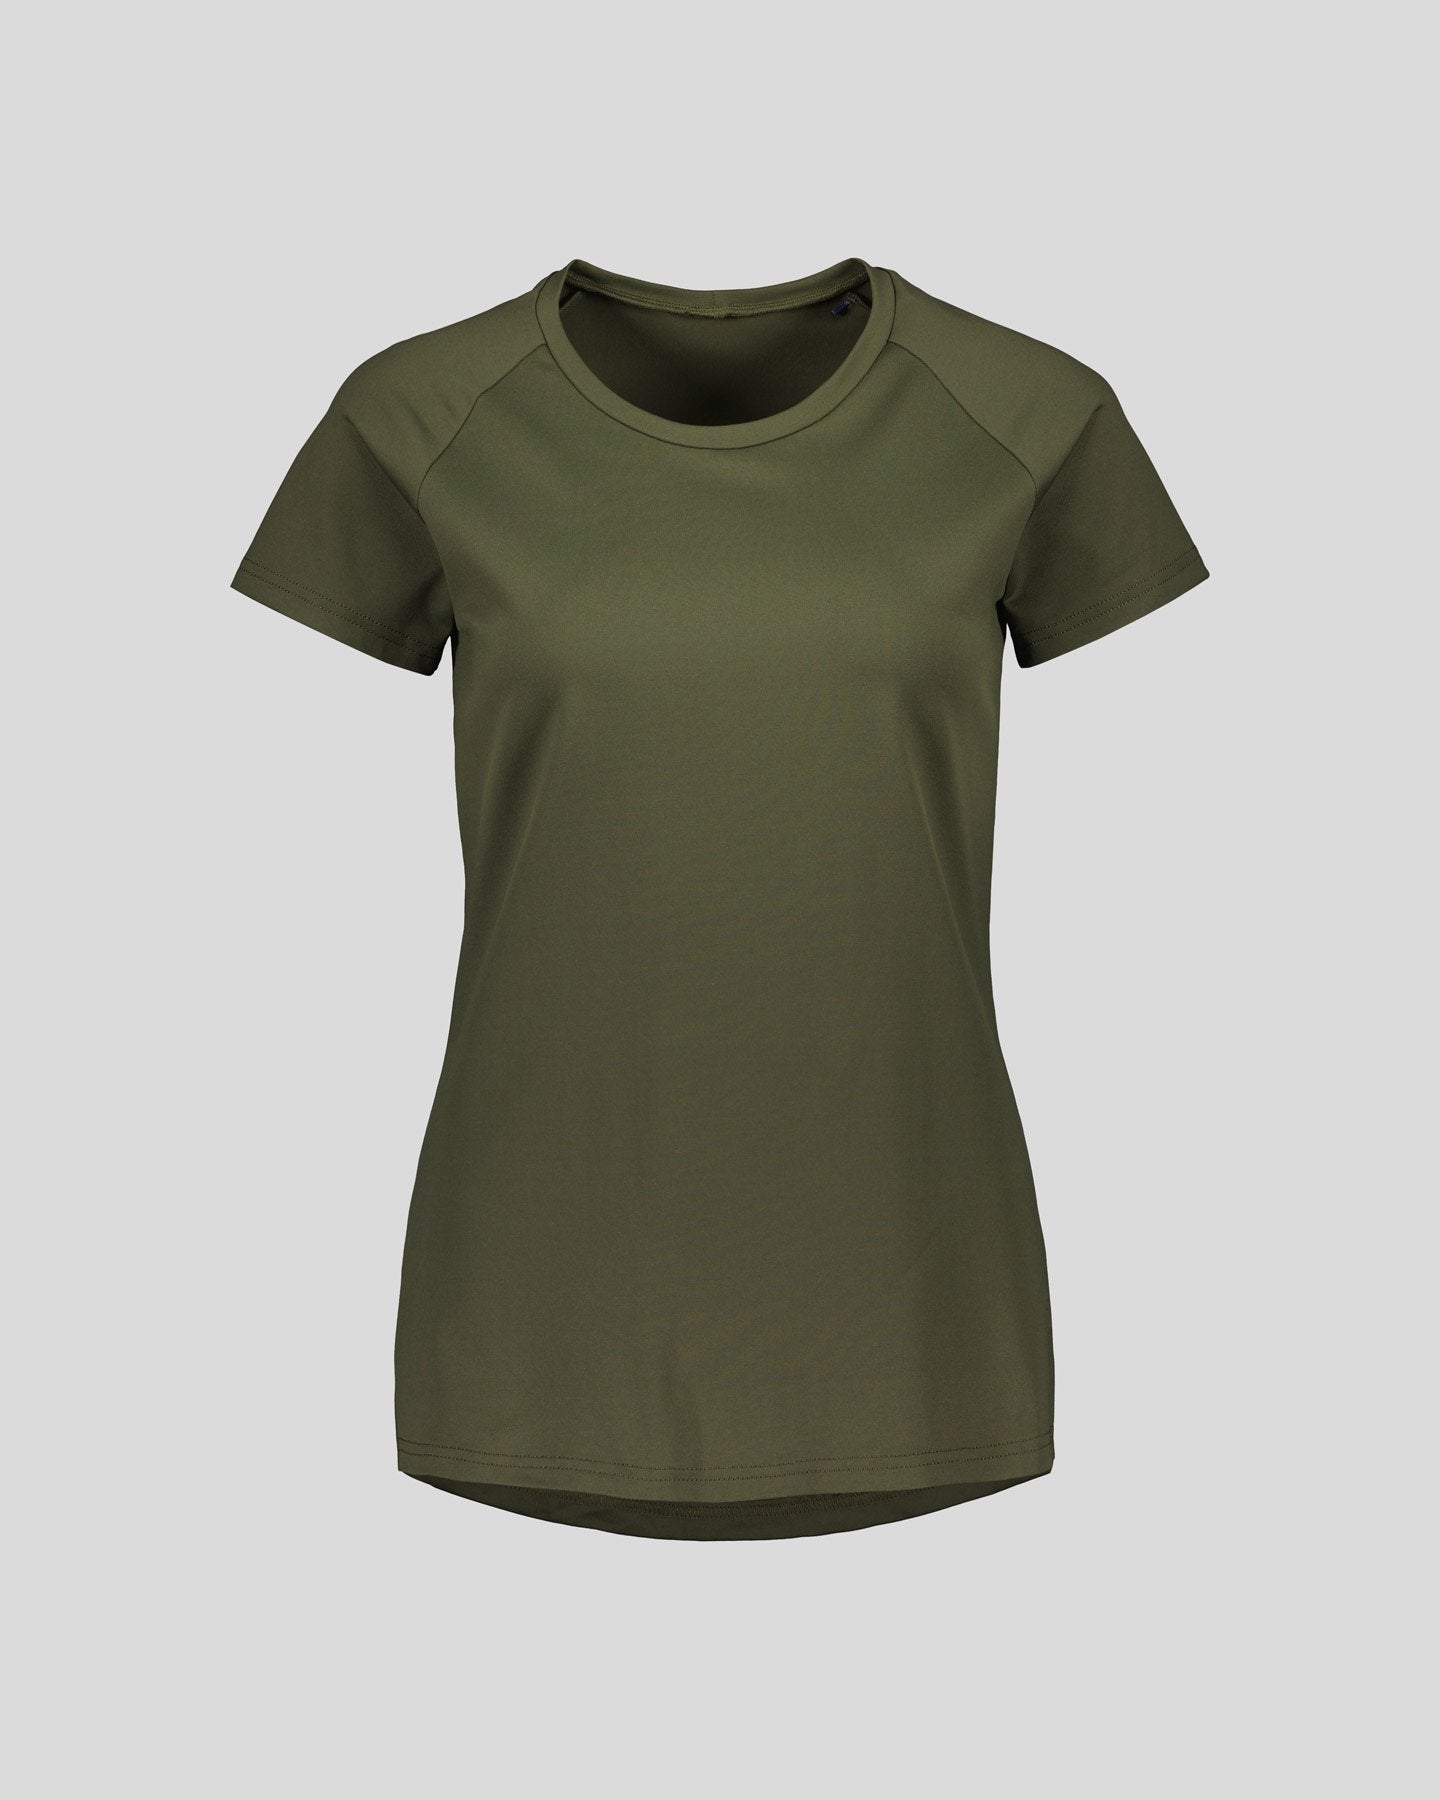 Népra W's Cella Sport T-Shirt - Oeko-tex 100 Standard Certified Polyamide Army Shirt